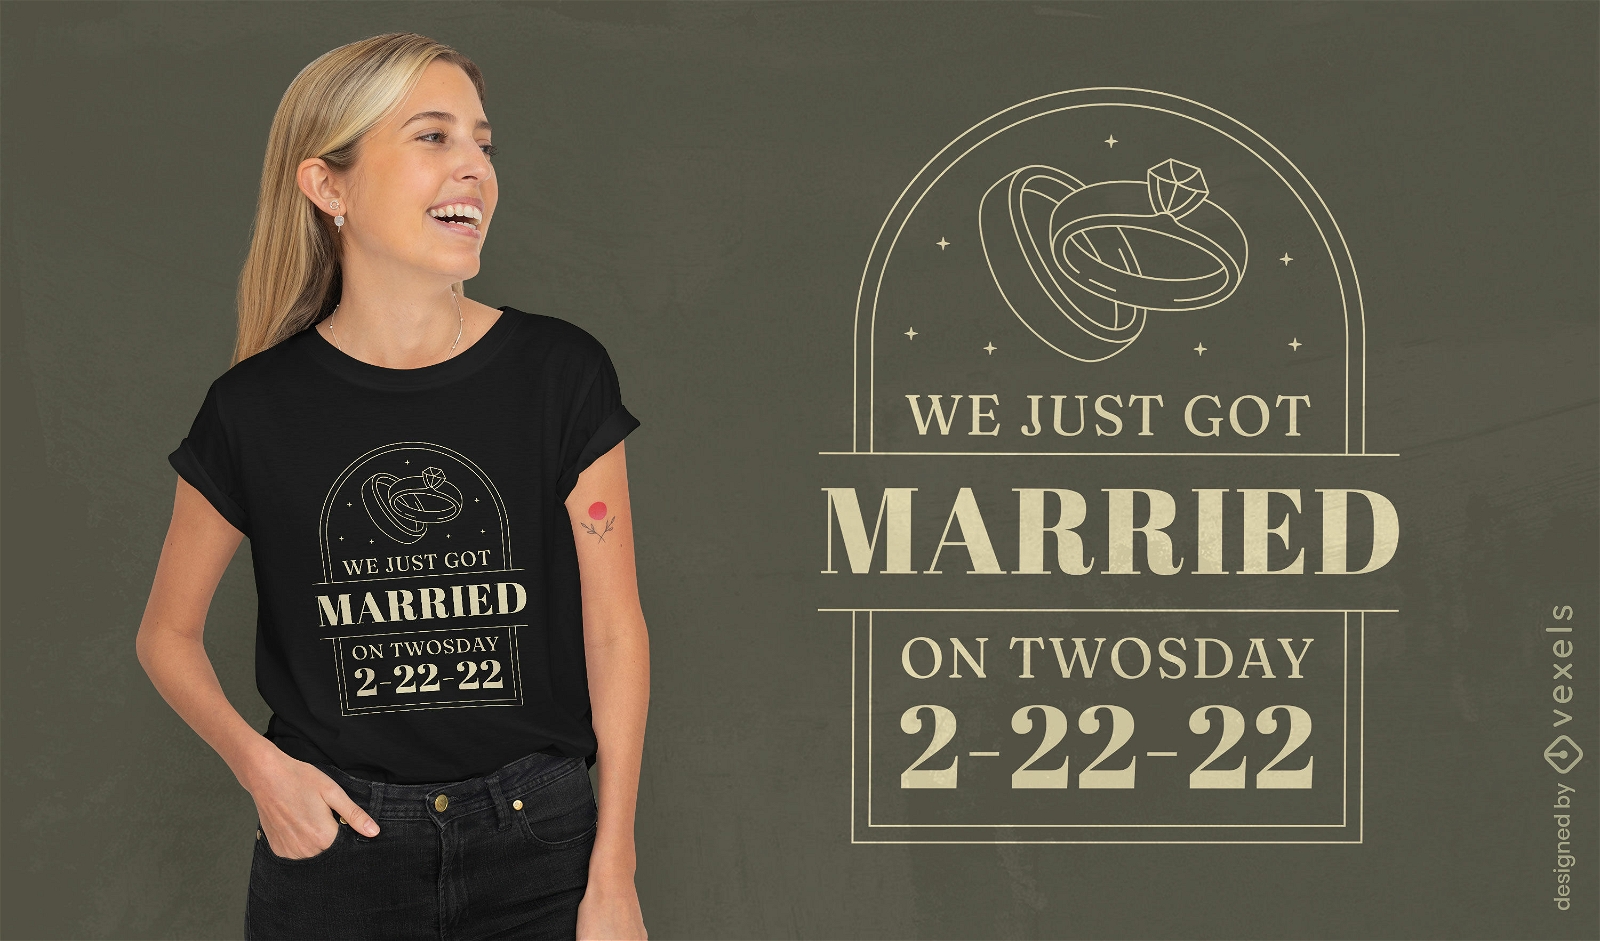 Just married 2 22 22 t-shirt design